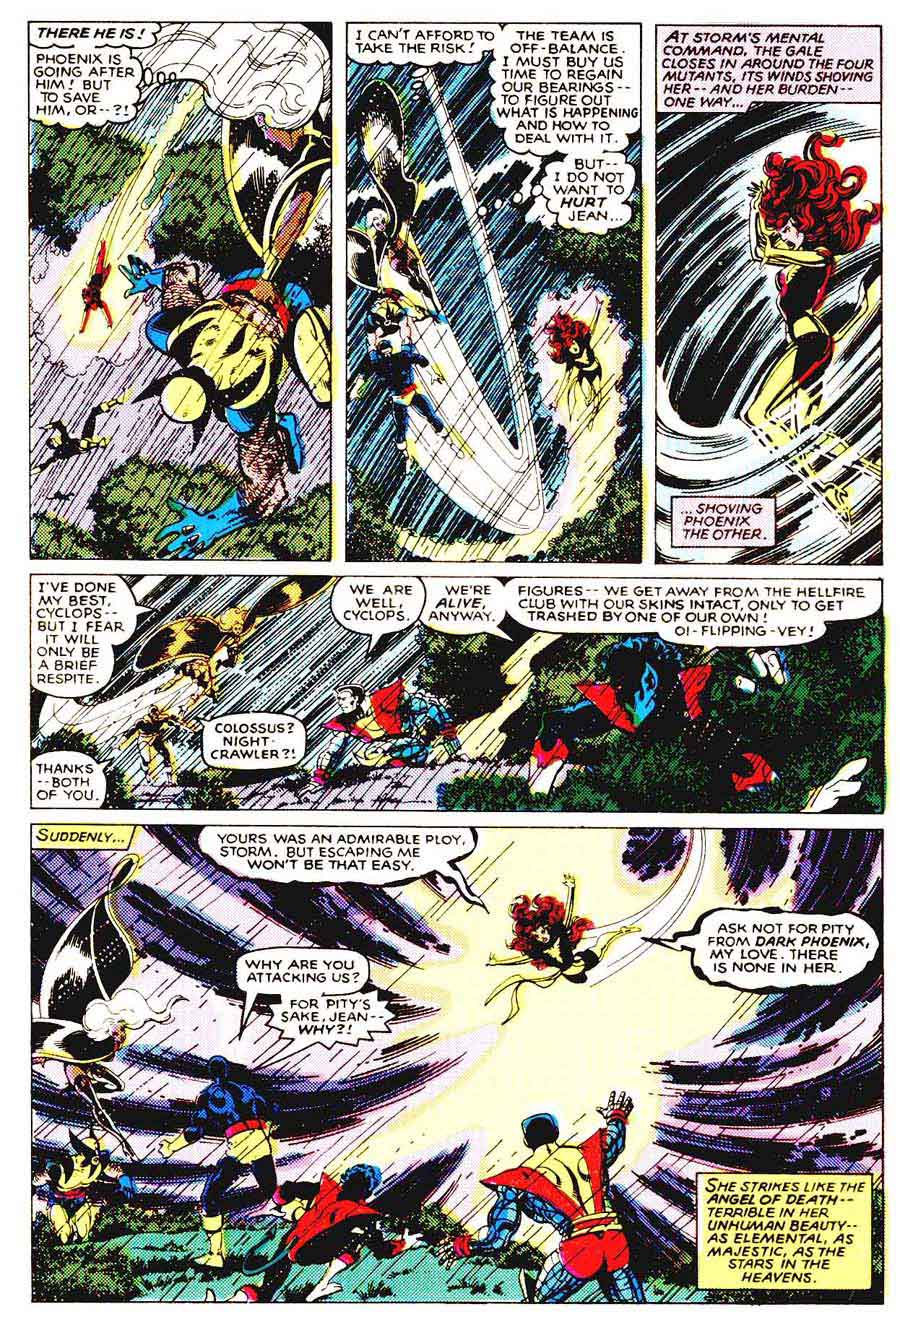 X-men v1 #135 marvel comic book page art by John Byrne